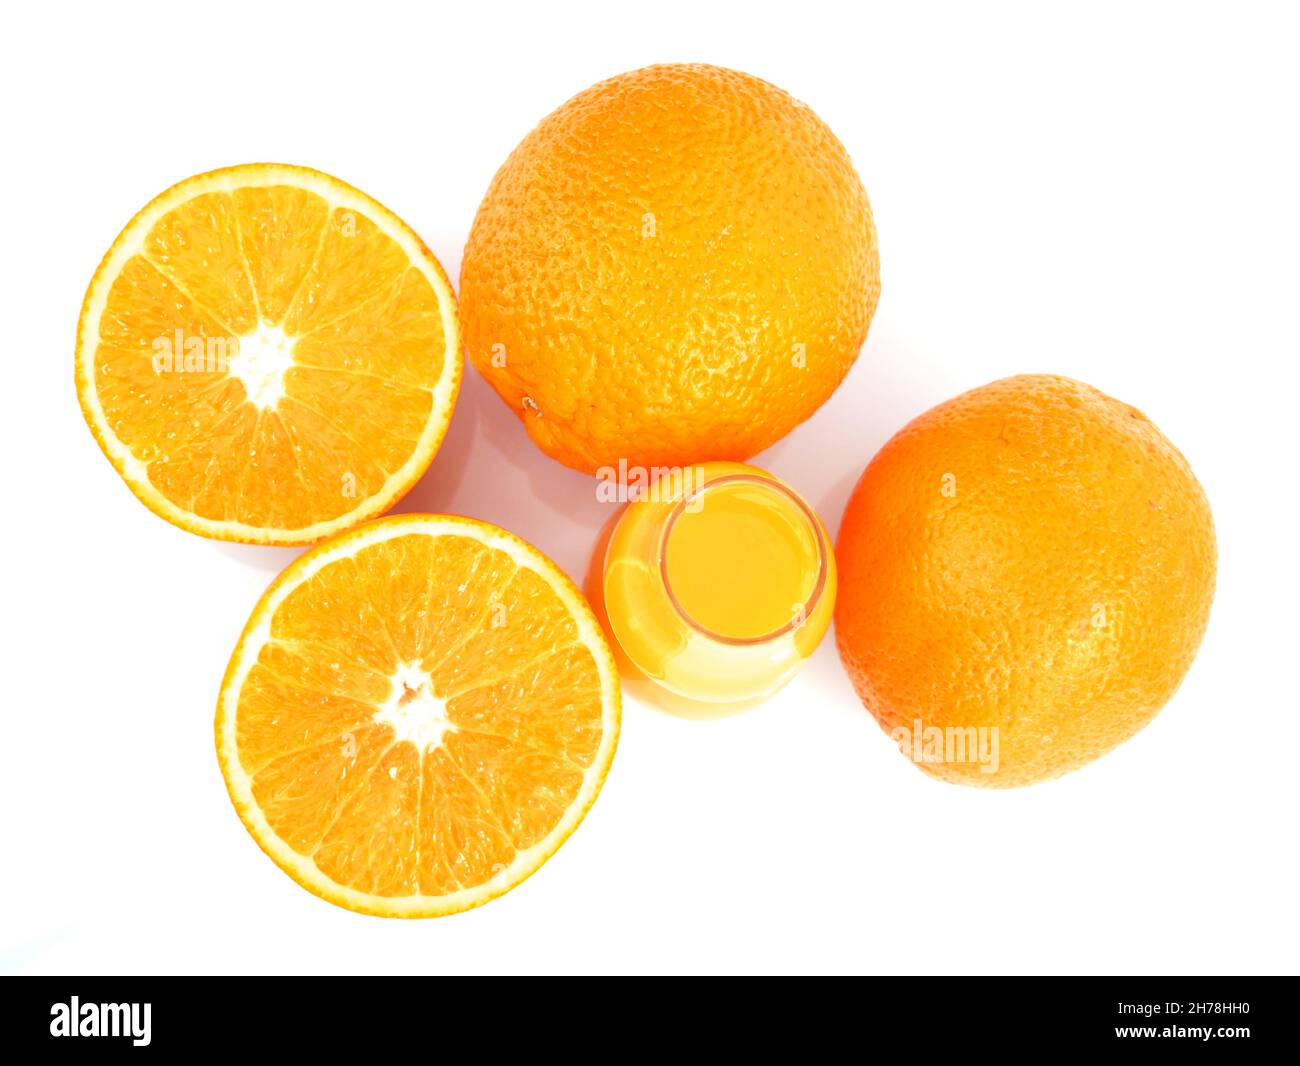 Juicy oranges isolated on a white background. Stock Photo